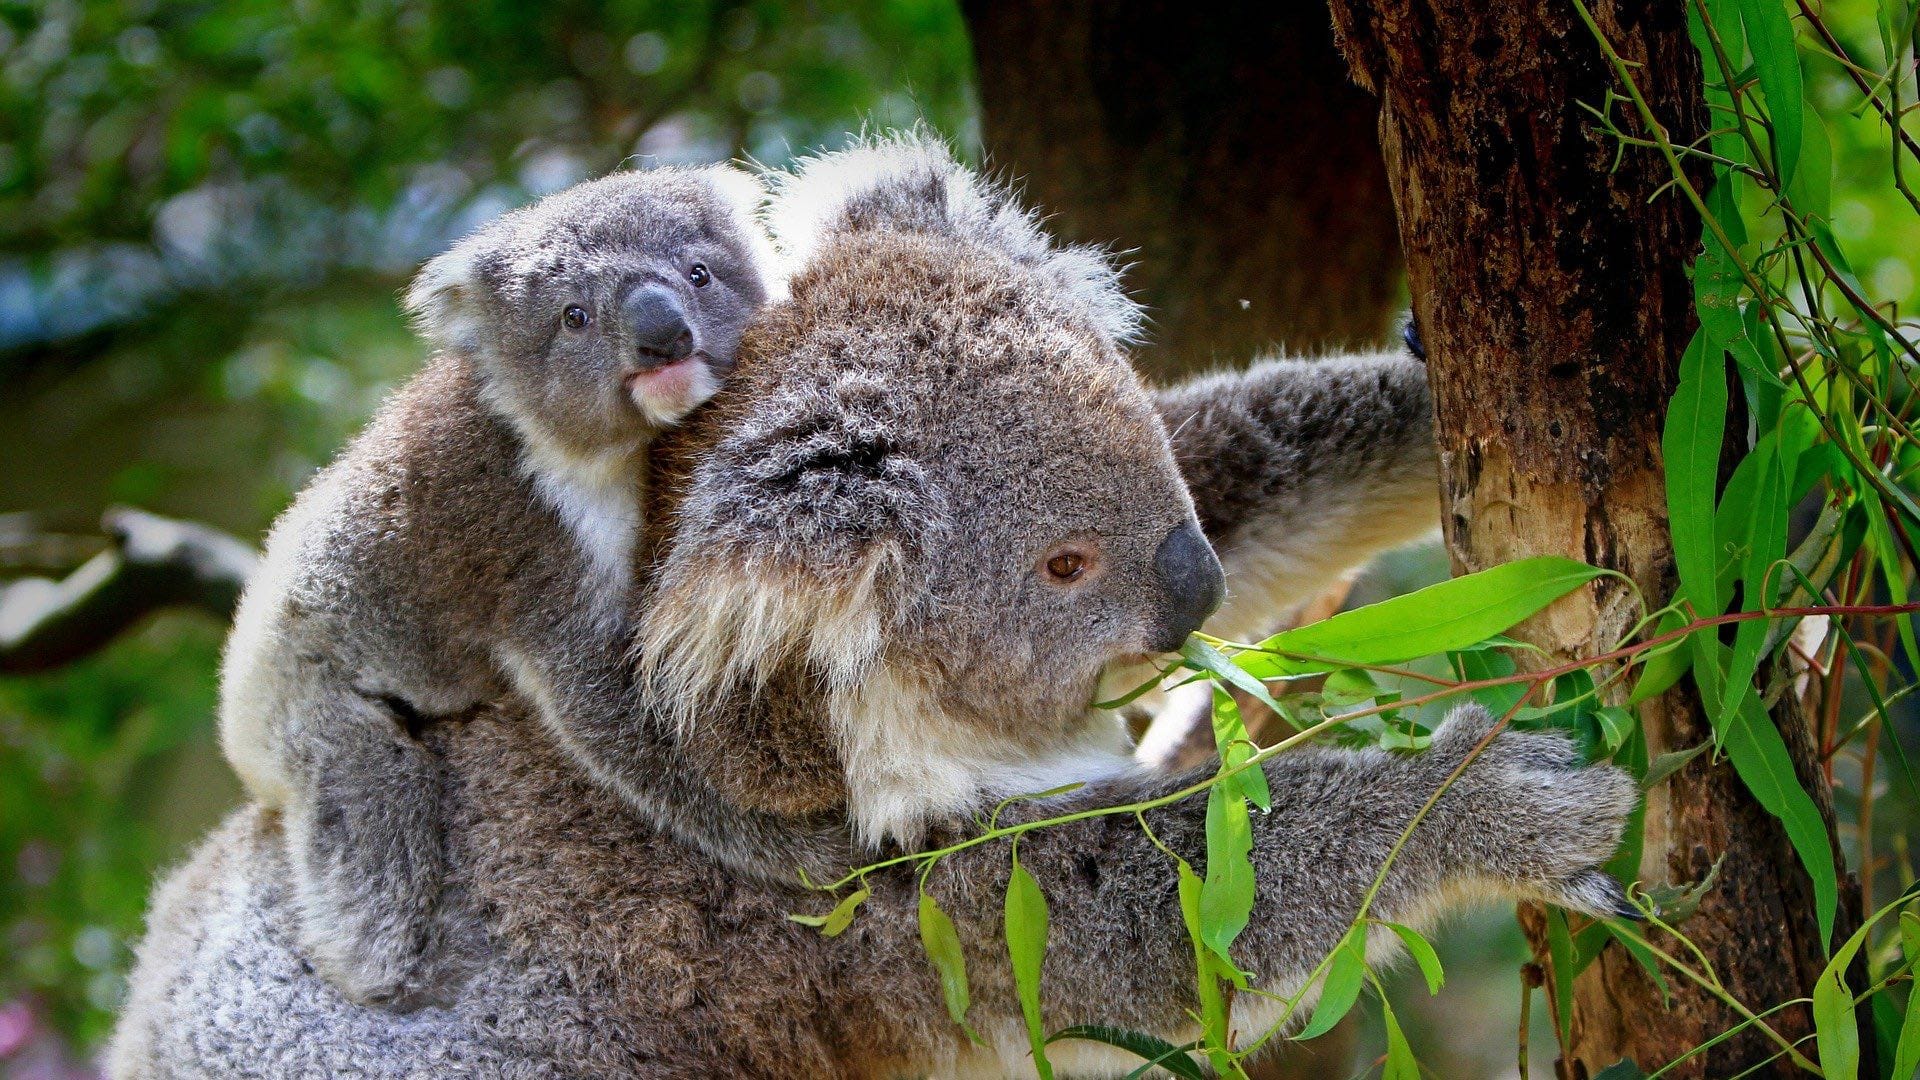 Image: Mother and baby koalas climbing a tree